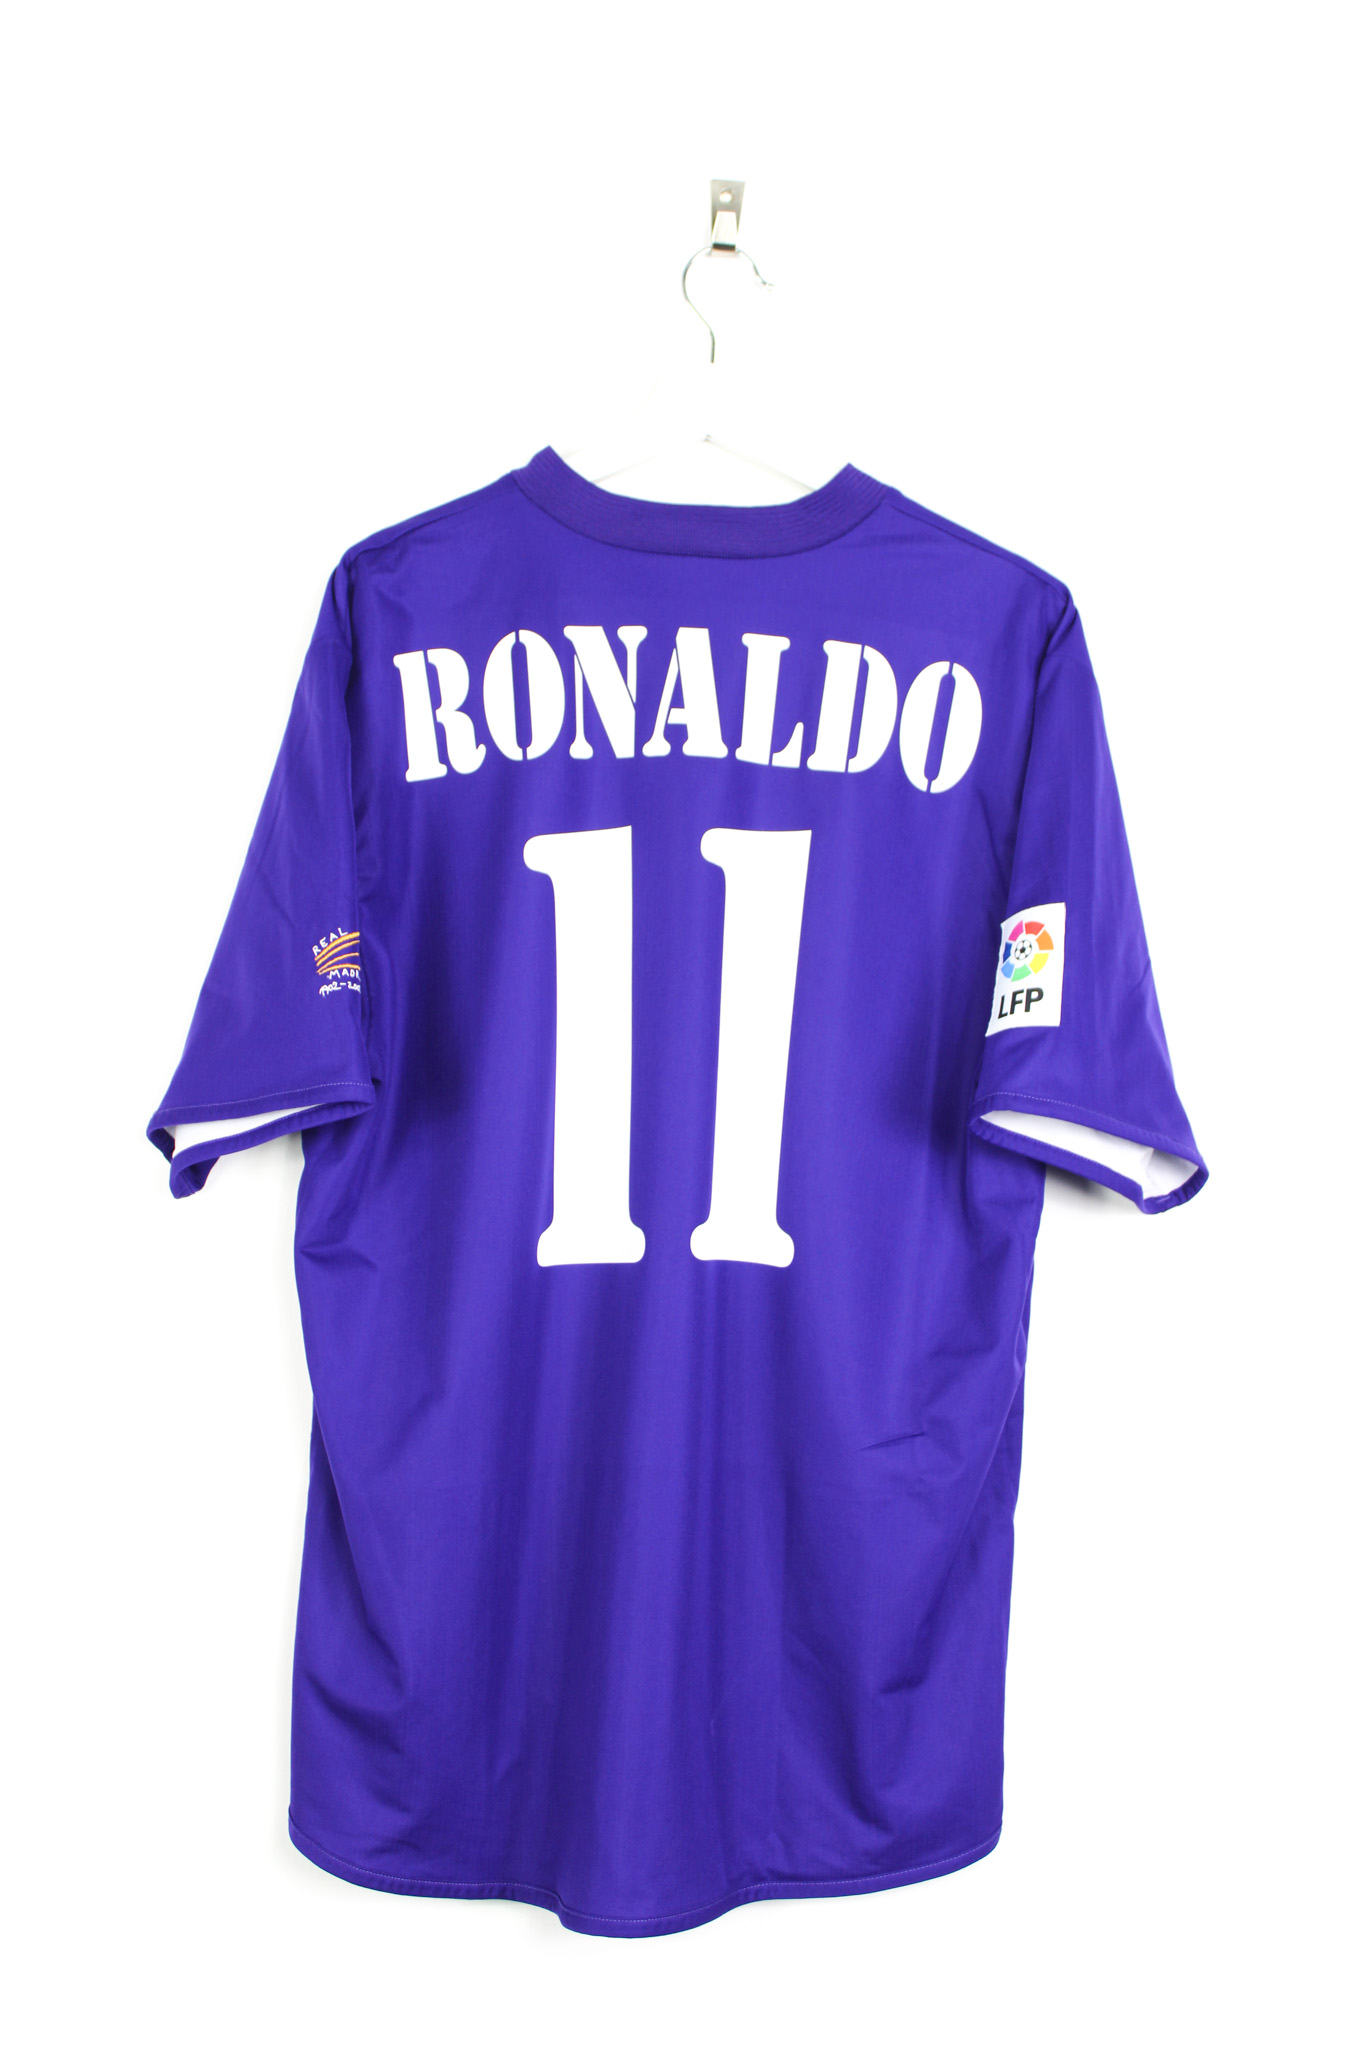 ronaldo 2002 jersey